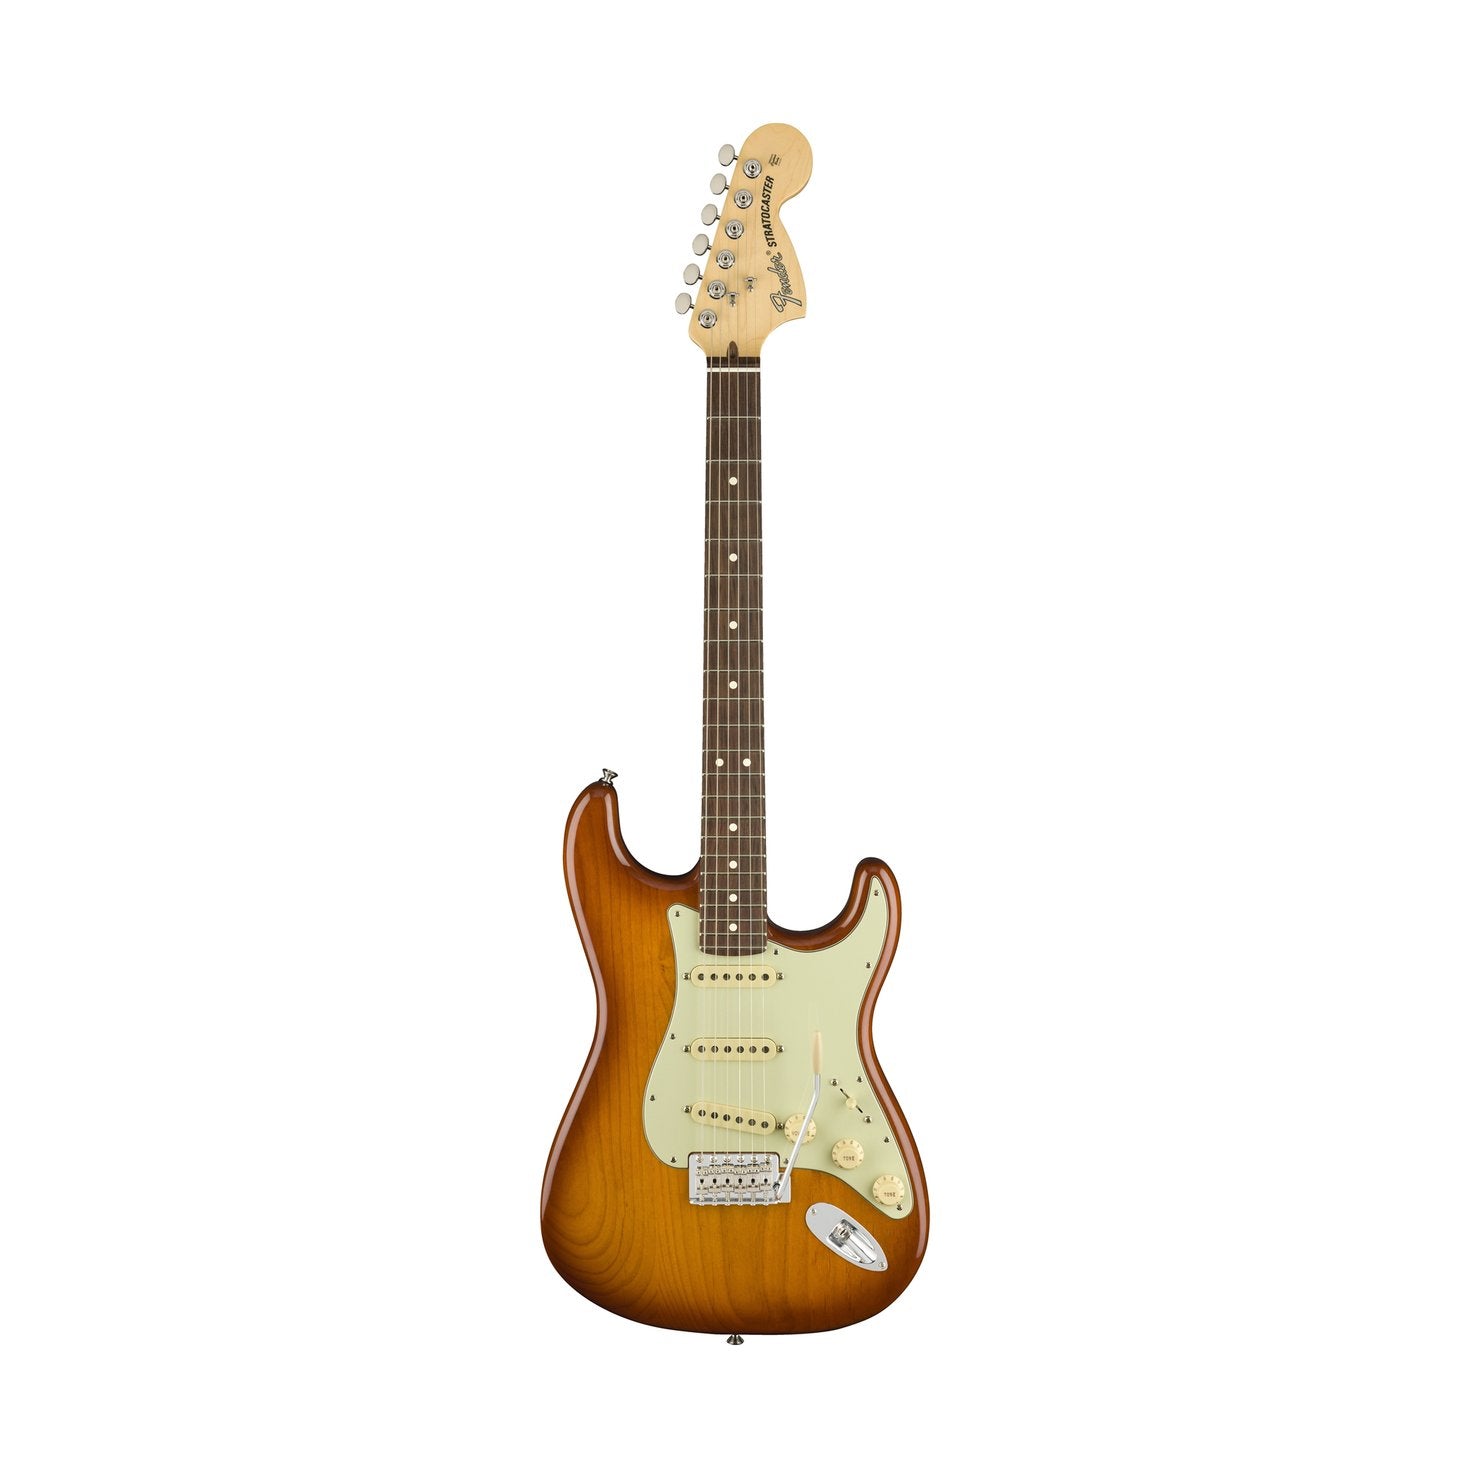 Fender American Performer Stratocaster Electric Guitar, Rosewood FB, Honeyburst, FENDER, ELECTRIC GUITAR, fender-electric-guitar-f03-011-4910-342, ZOSO MUSIC SDN BHD